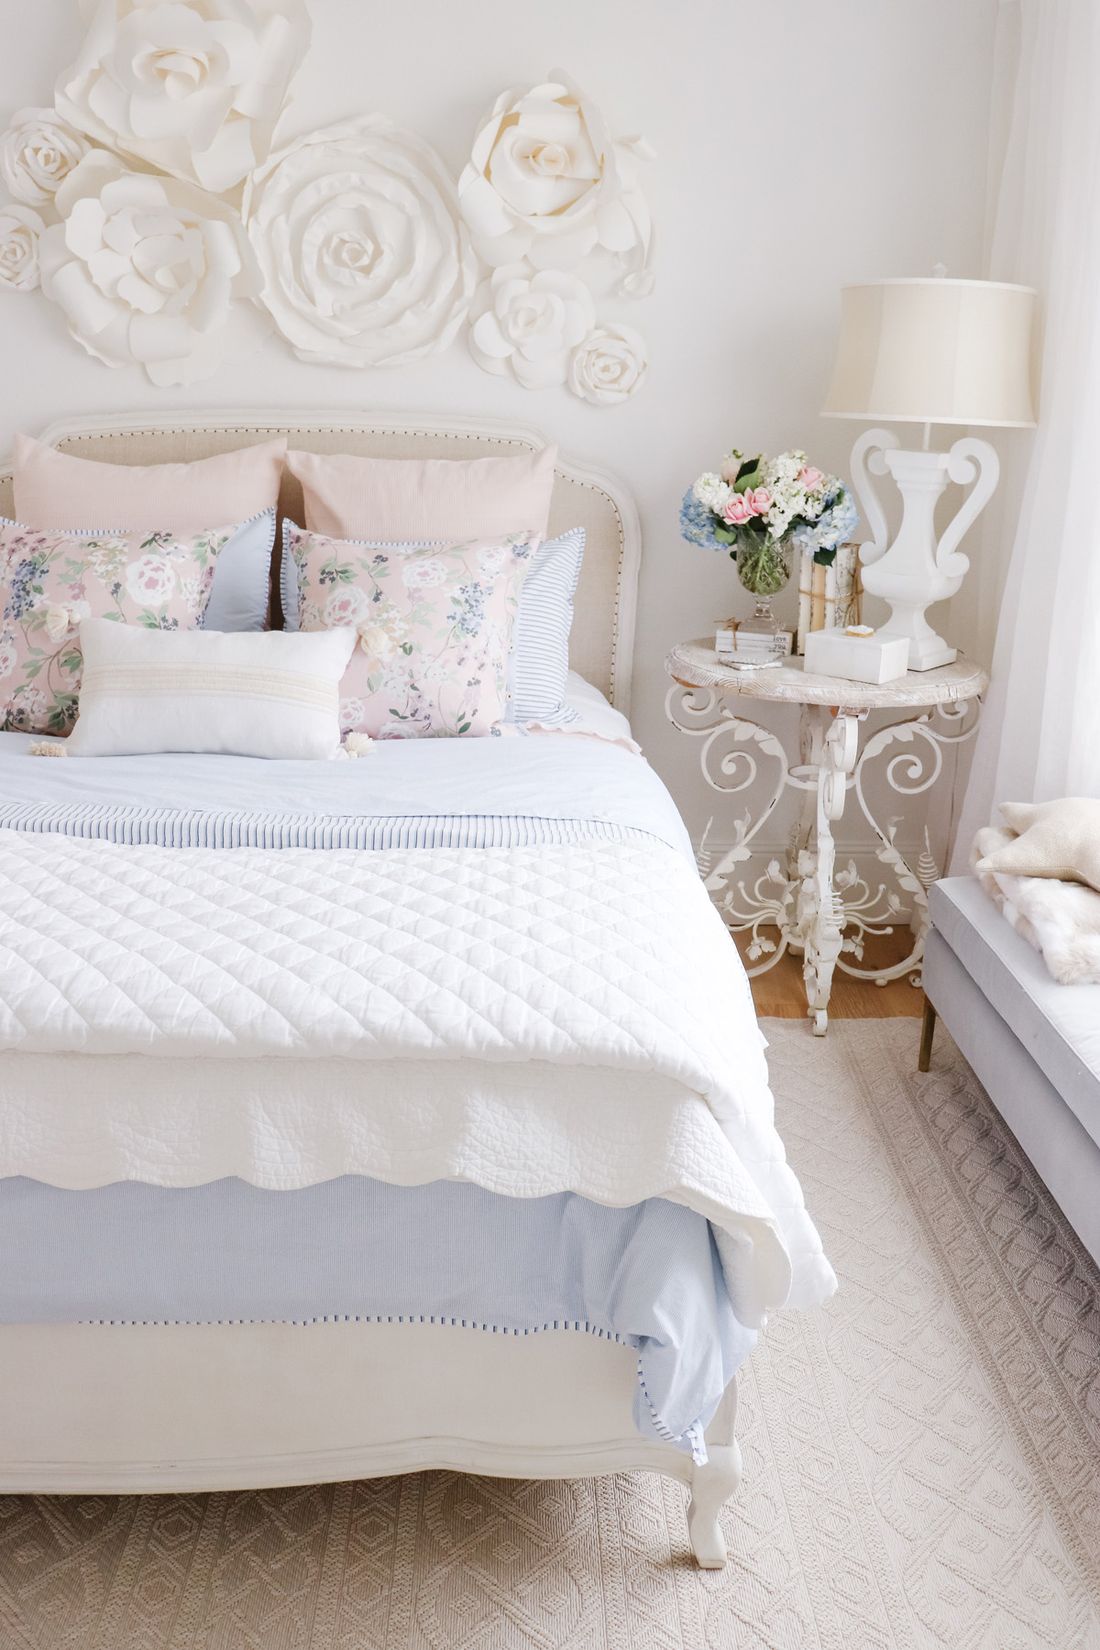 Feminine Bedroom with Textured Linens via kristy wicks